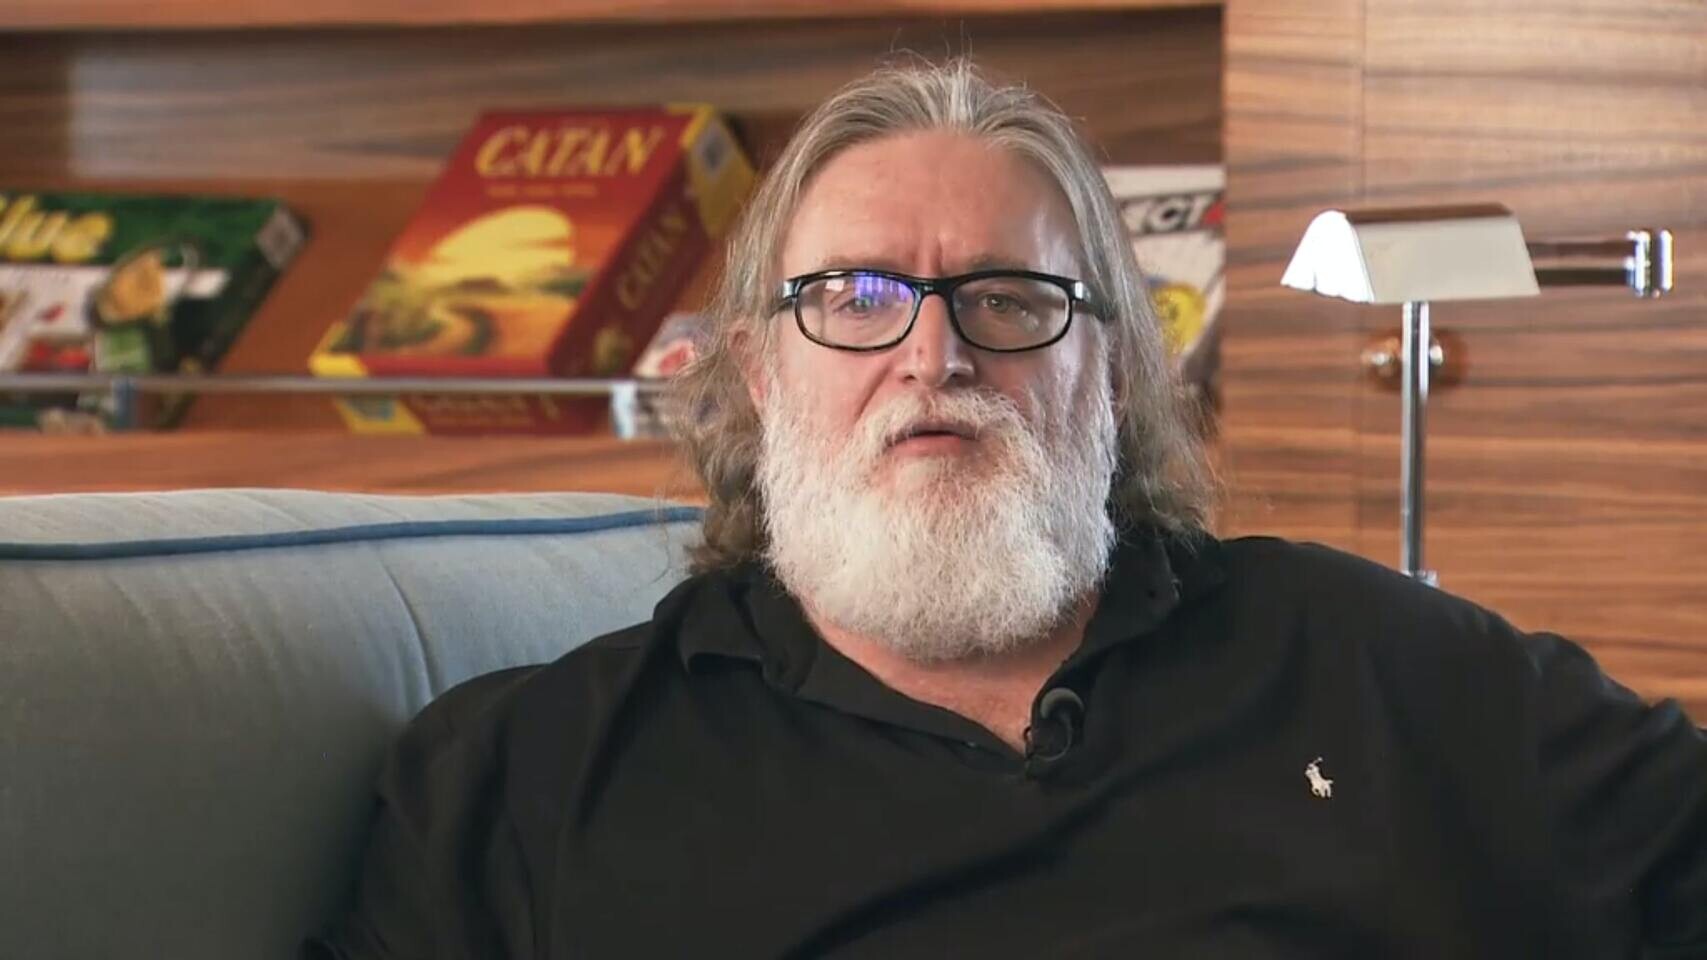 Gabe Newell is worth $1.5 billion